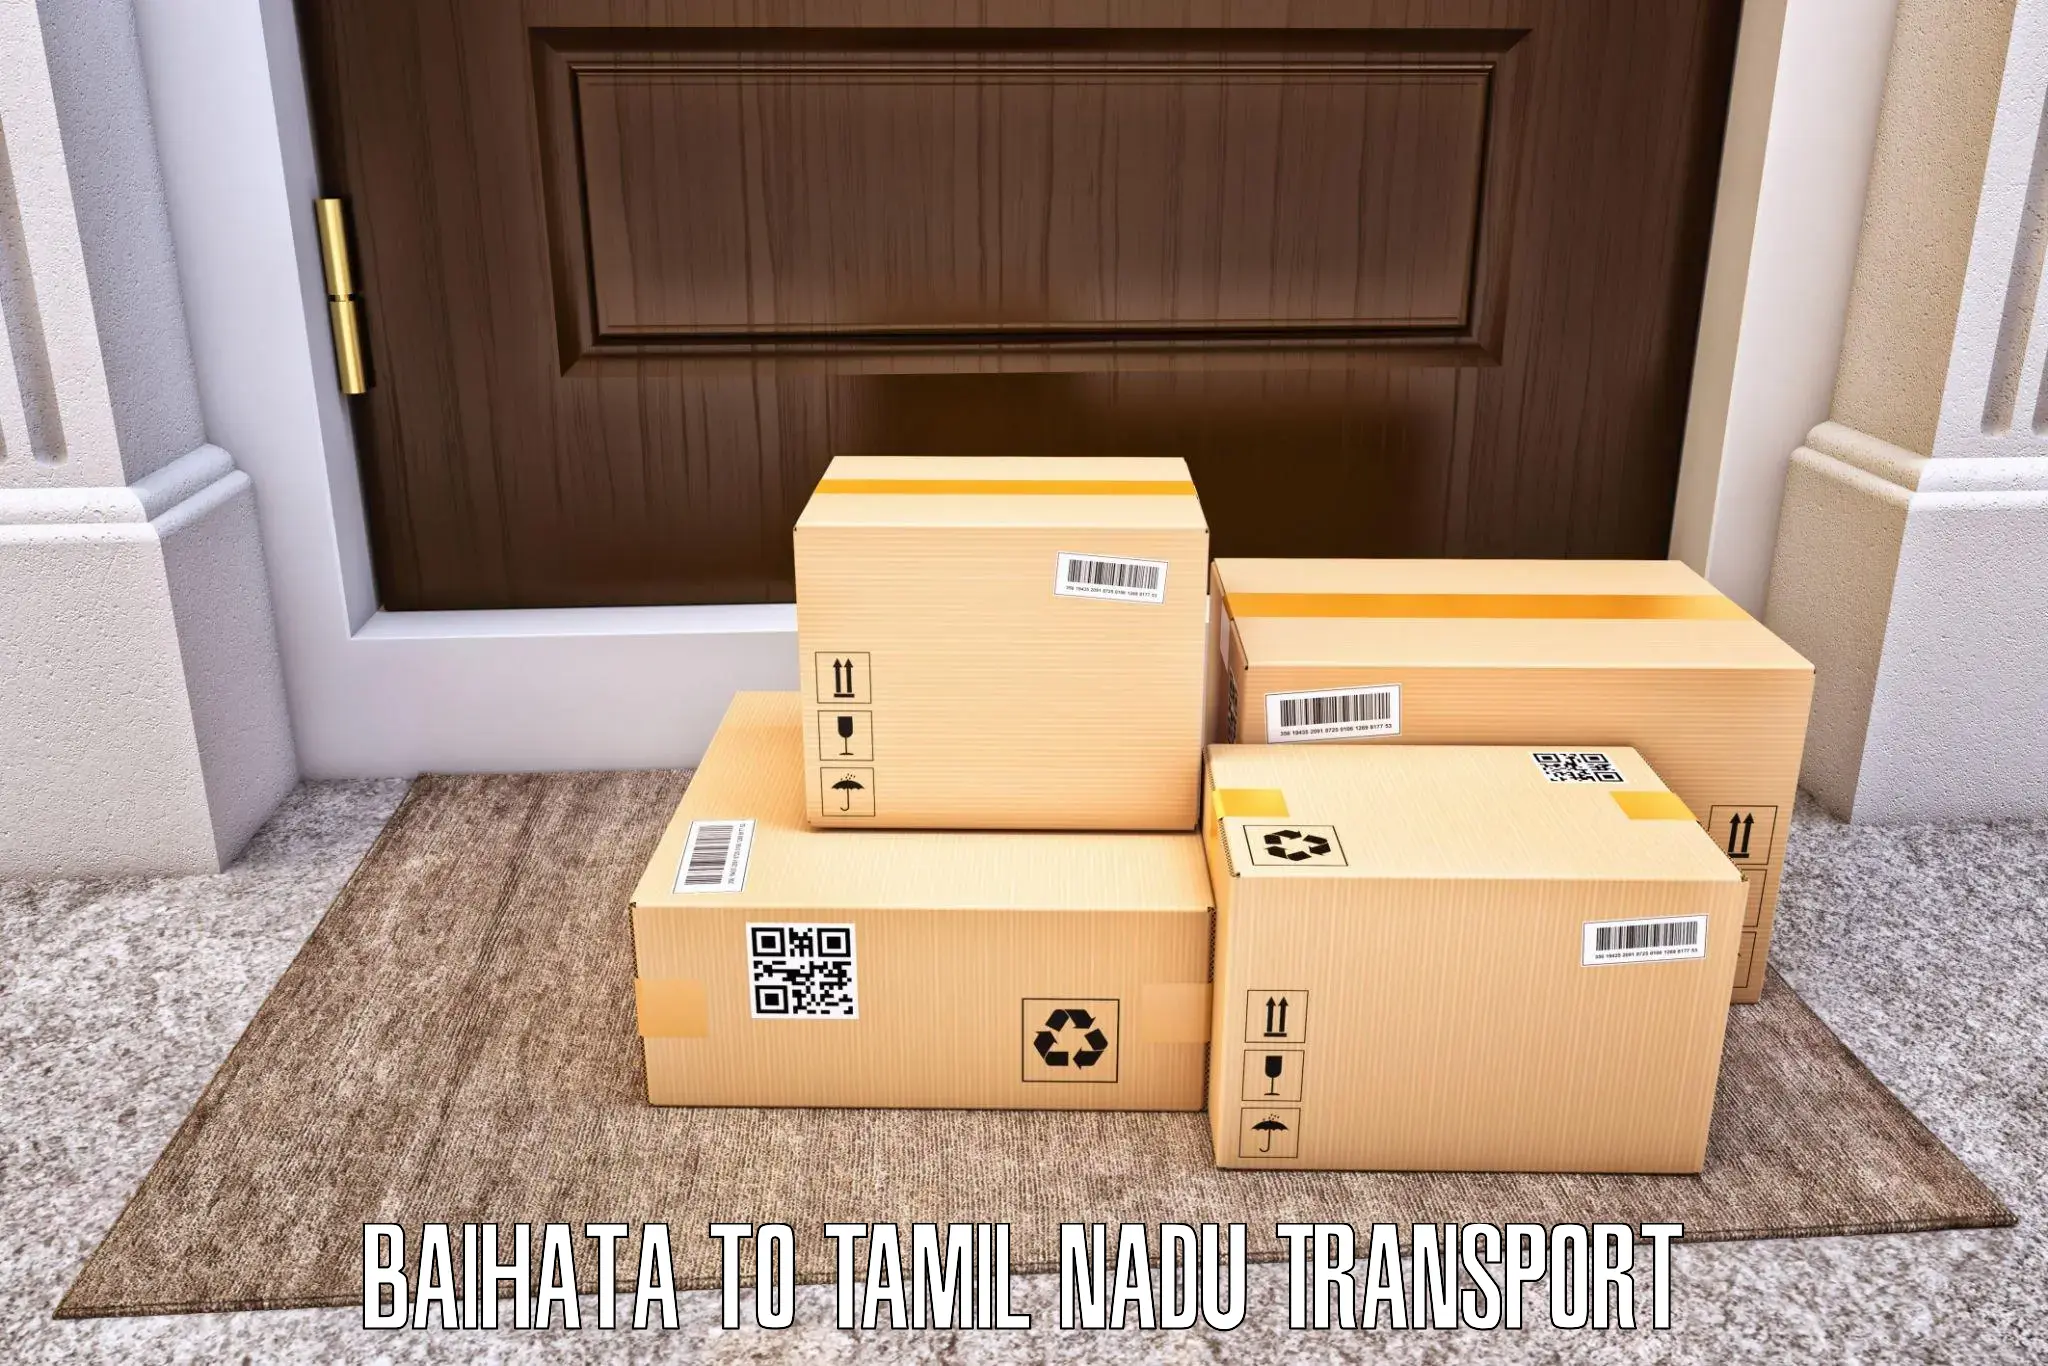 Container transportation services Baihata to Periyakulam